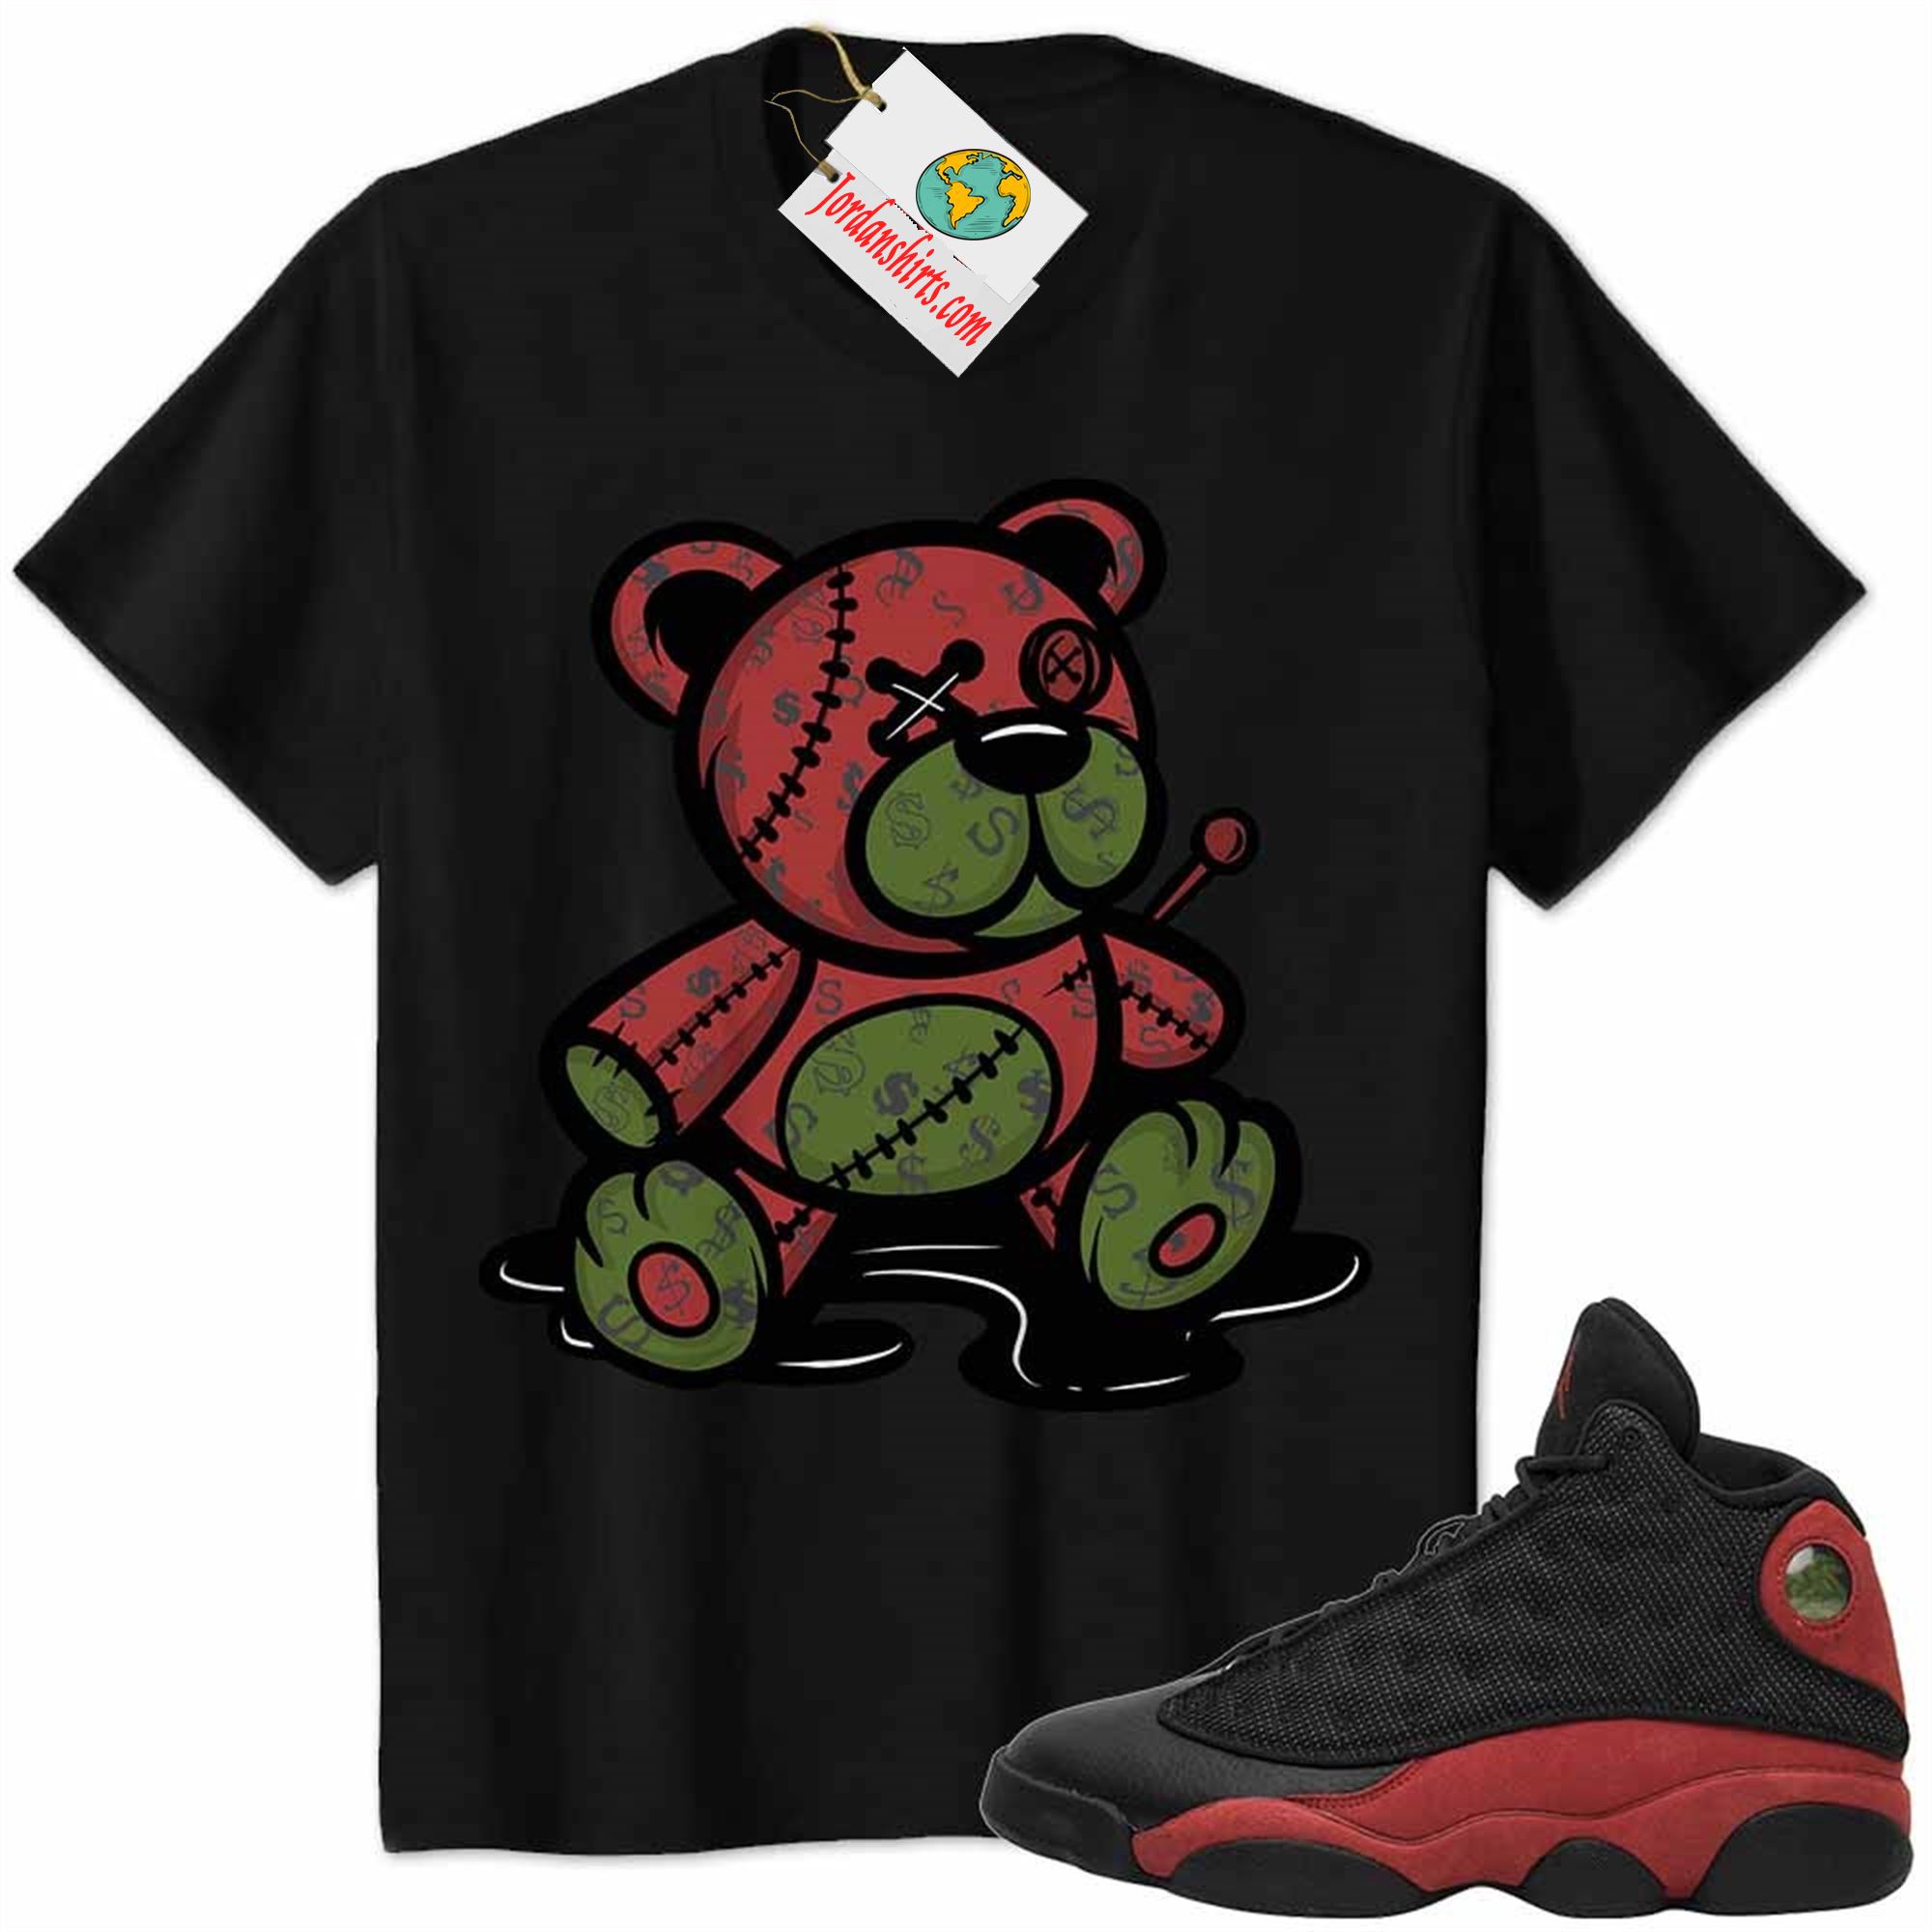 Jordan 13 Shirt, Jordan 13 Bred Shirt Teddy Bear All Money In Black Plus Size Up To 5xl